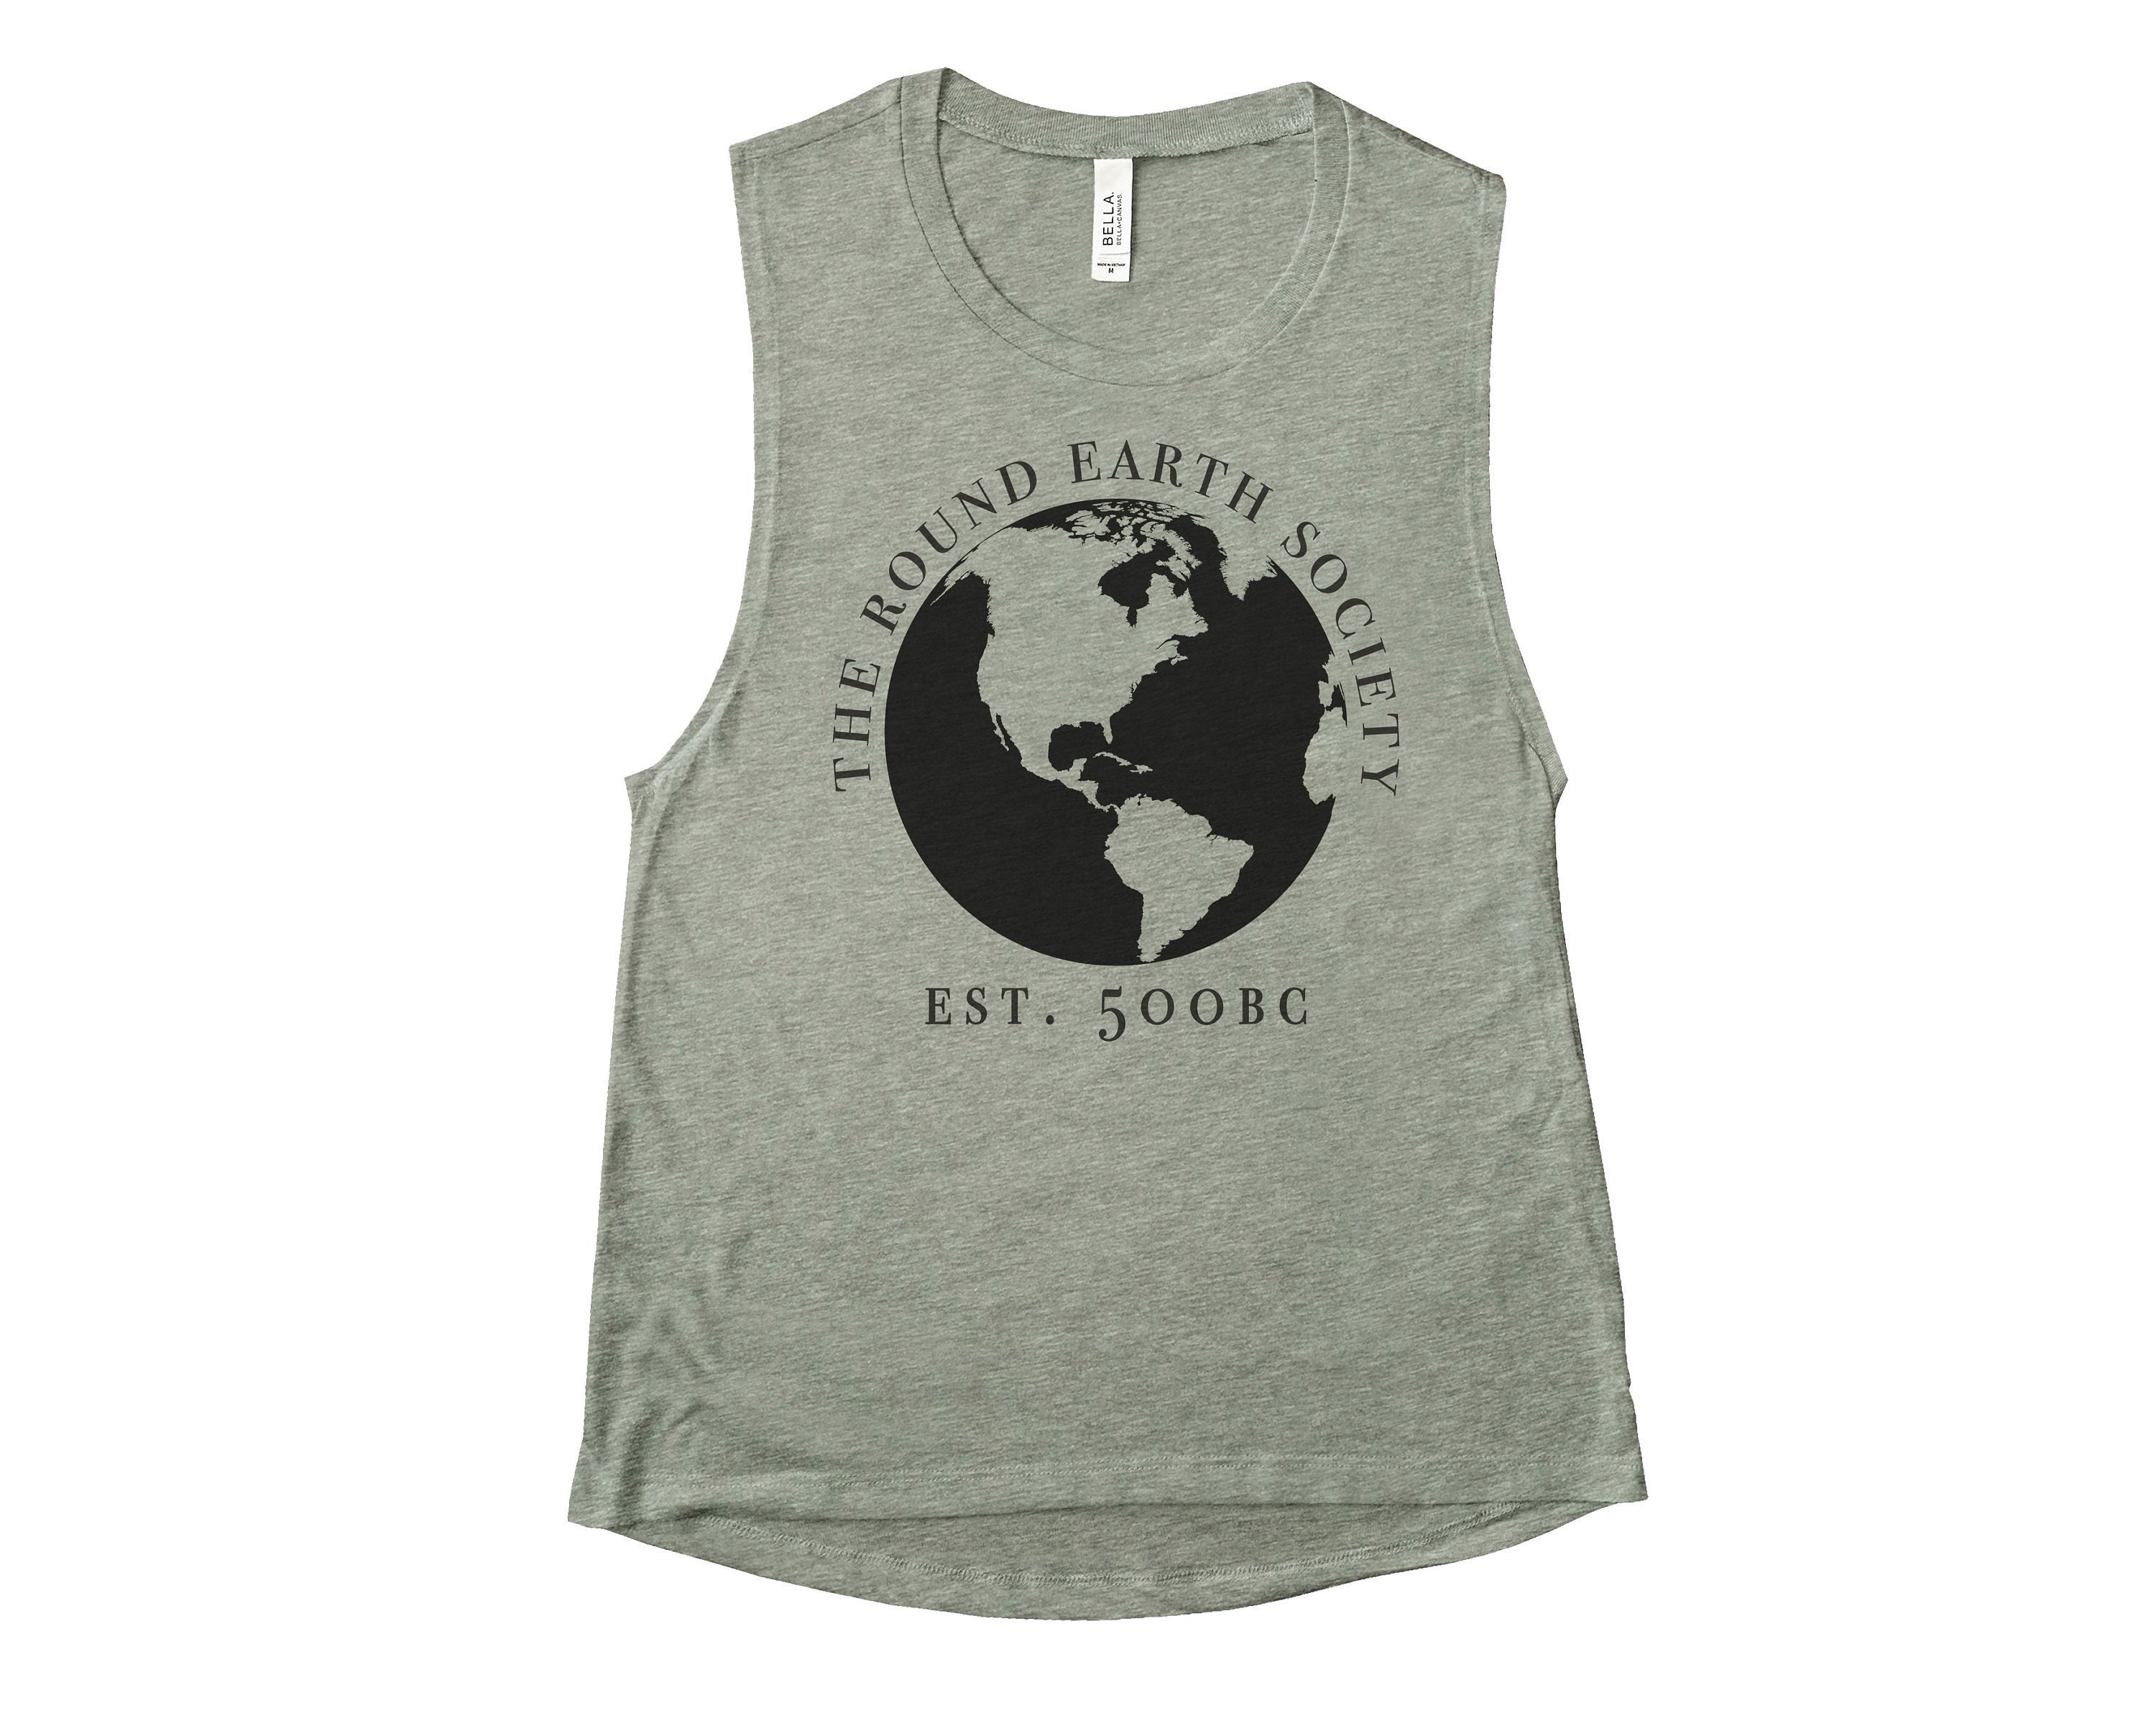 Earth Shirt Muscle Tank Top Women Round Funny Shirt - Save The Earth, Vegan Fast Free Shipping Shirts Tees